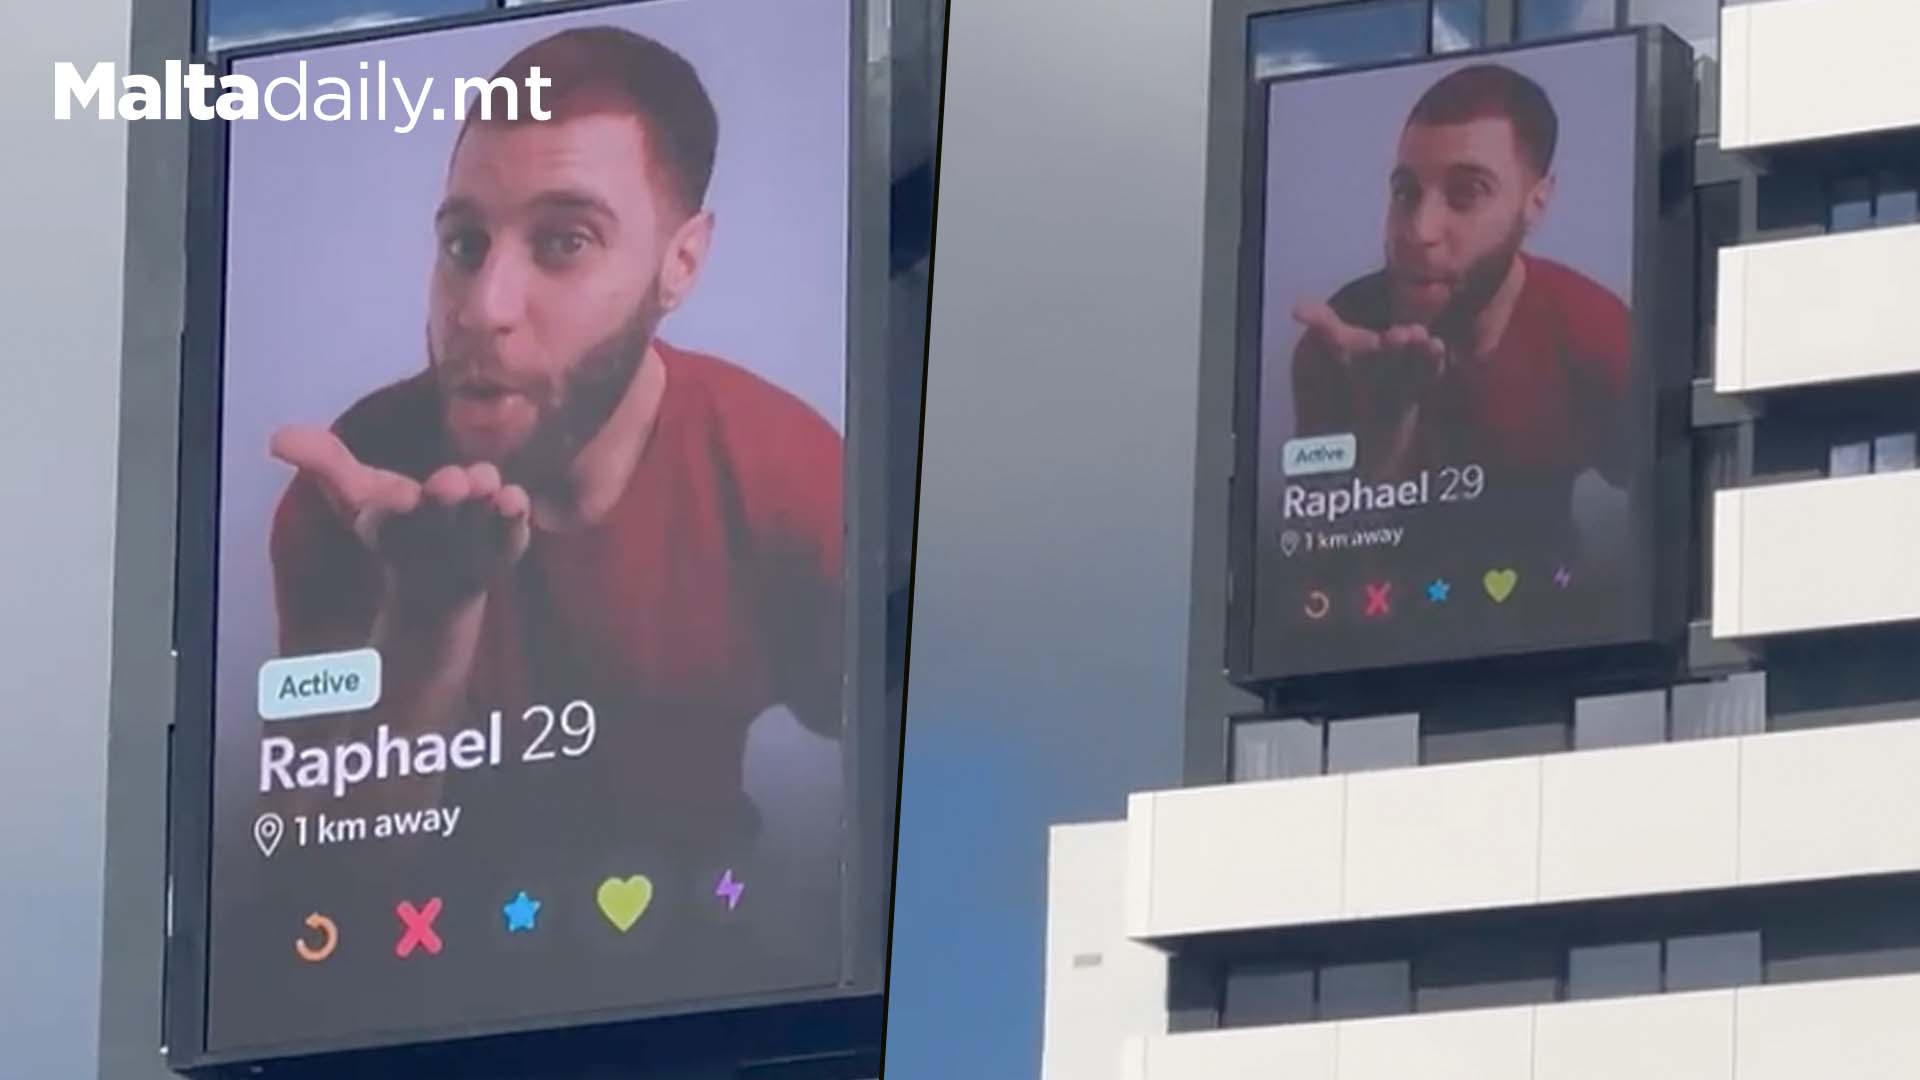 Raphael Pace Puts Up Tinder Profile On Billboards